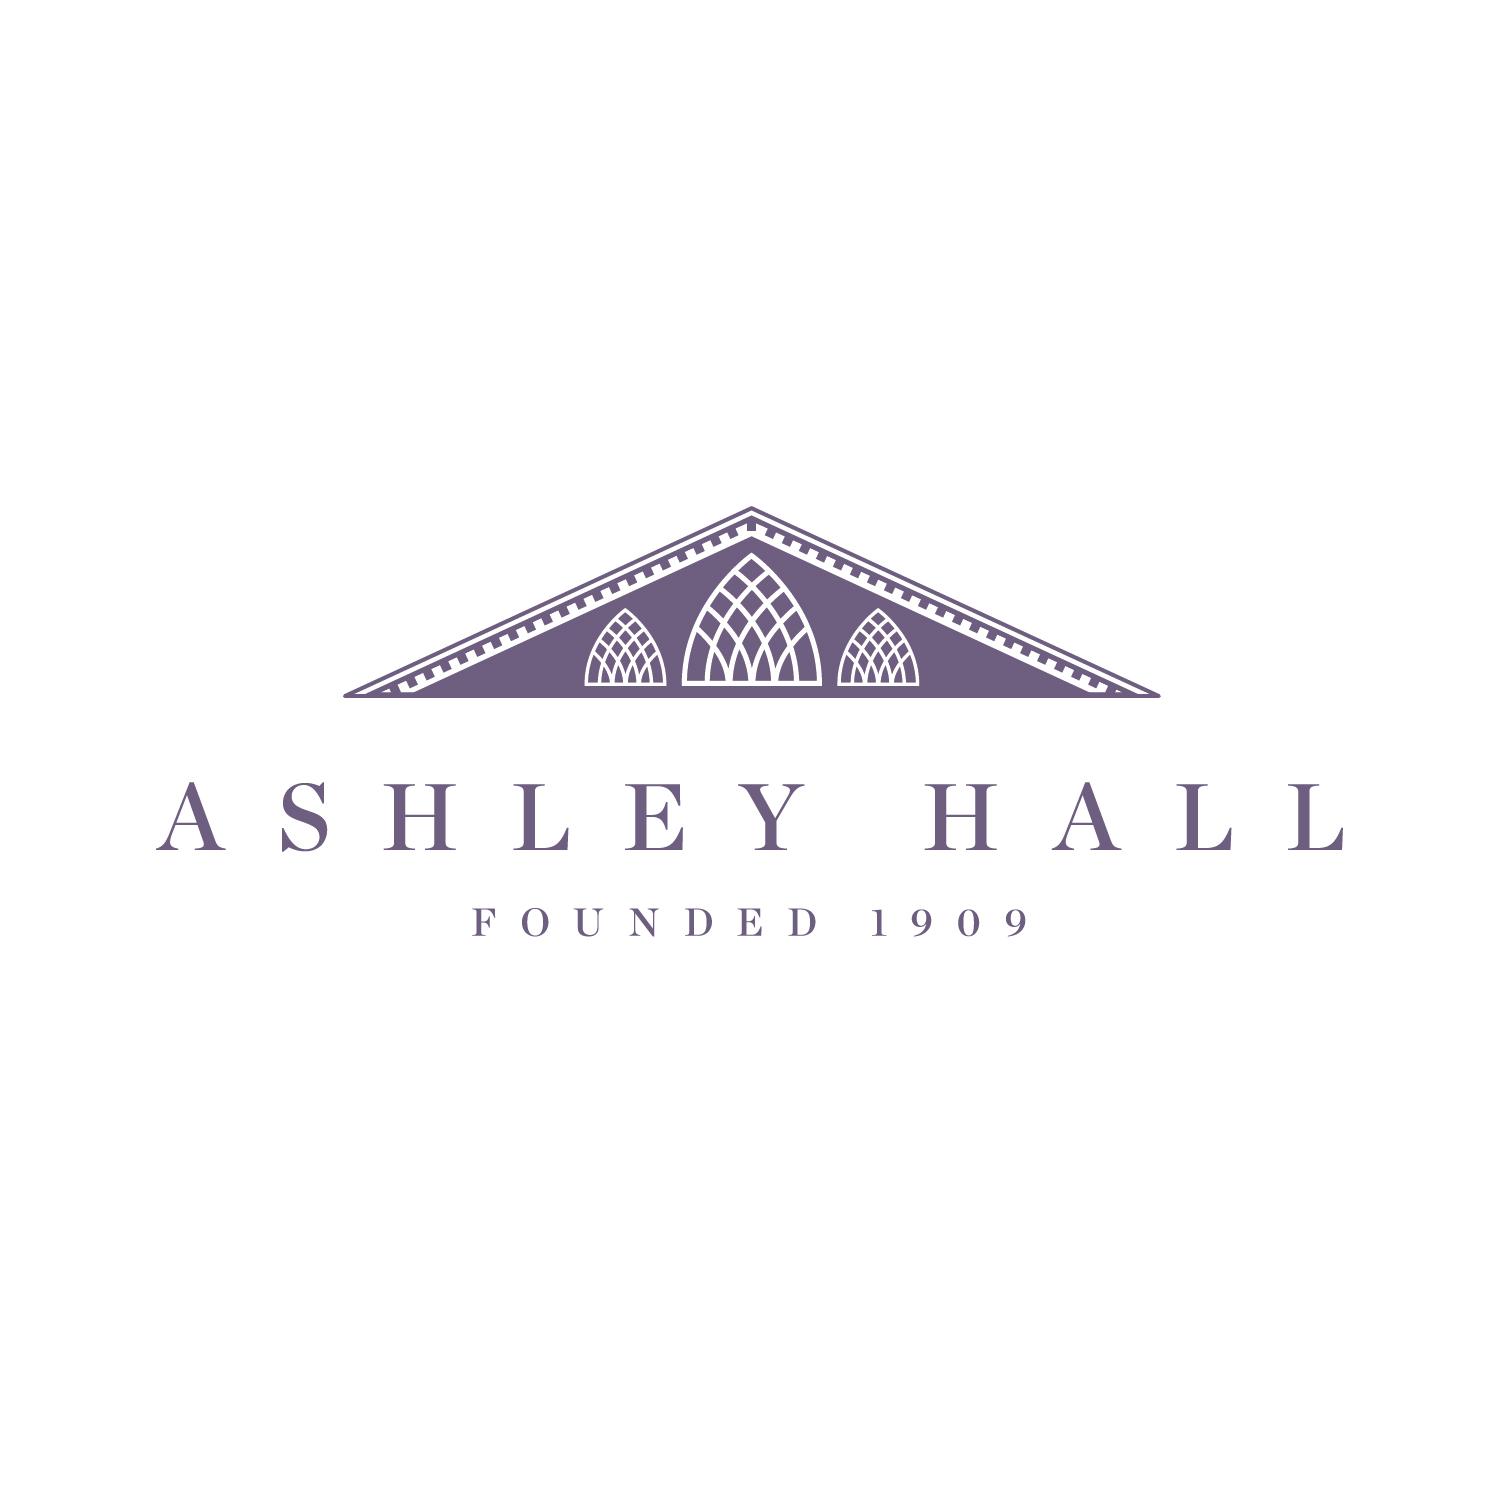 Hall Logo - Private School in Charleston, South Carolina | Ashley Hall